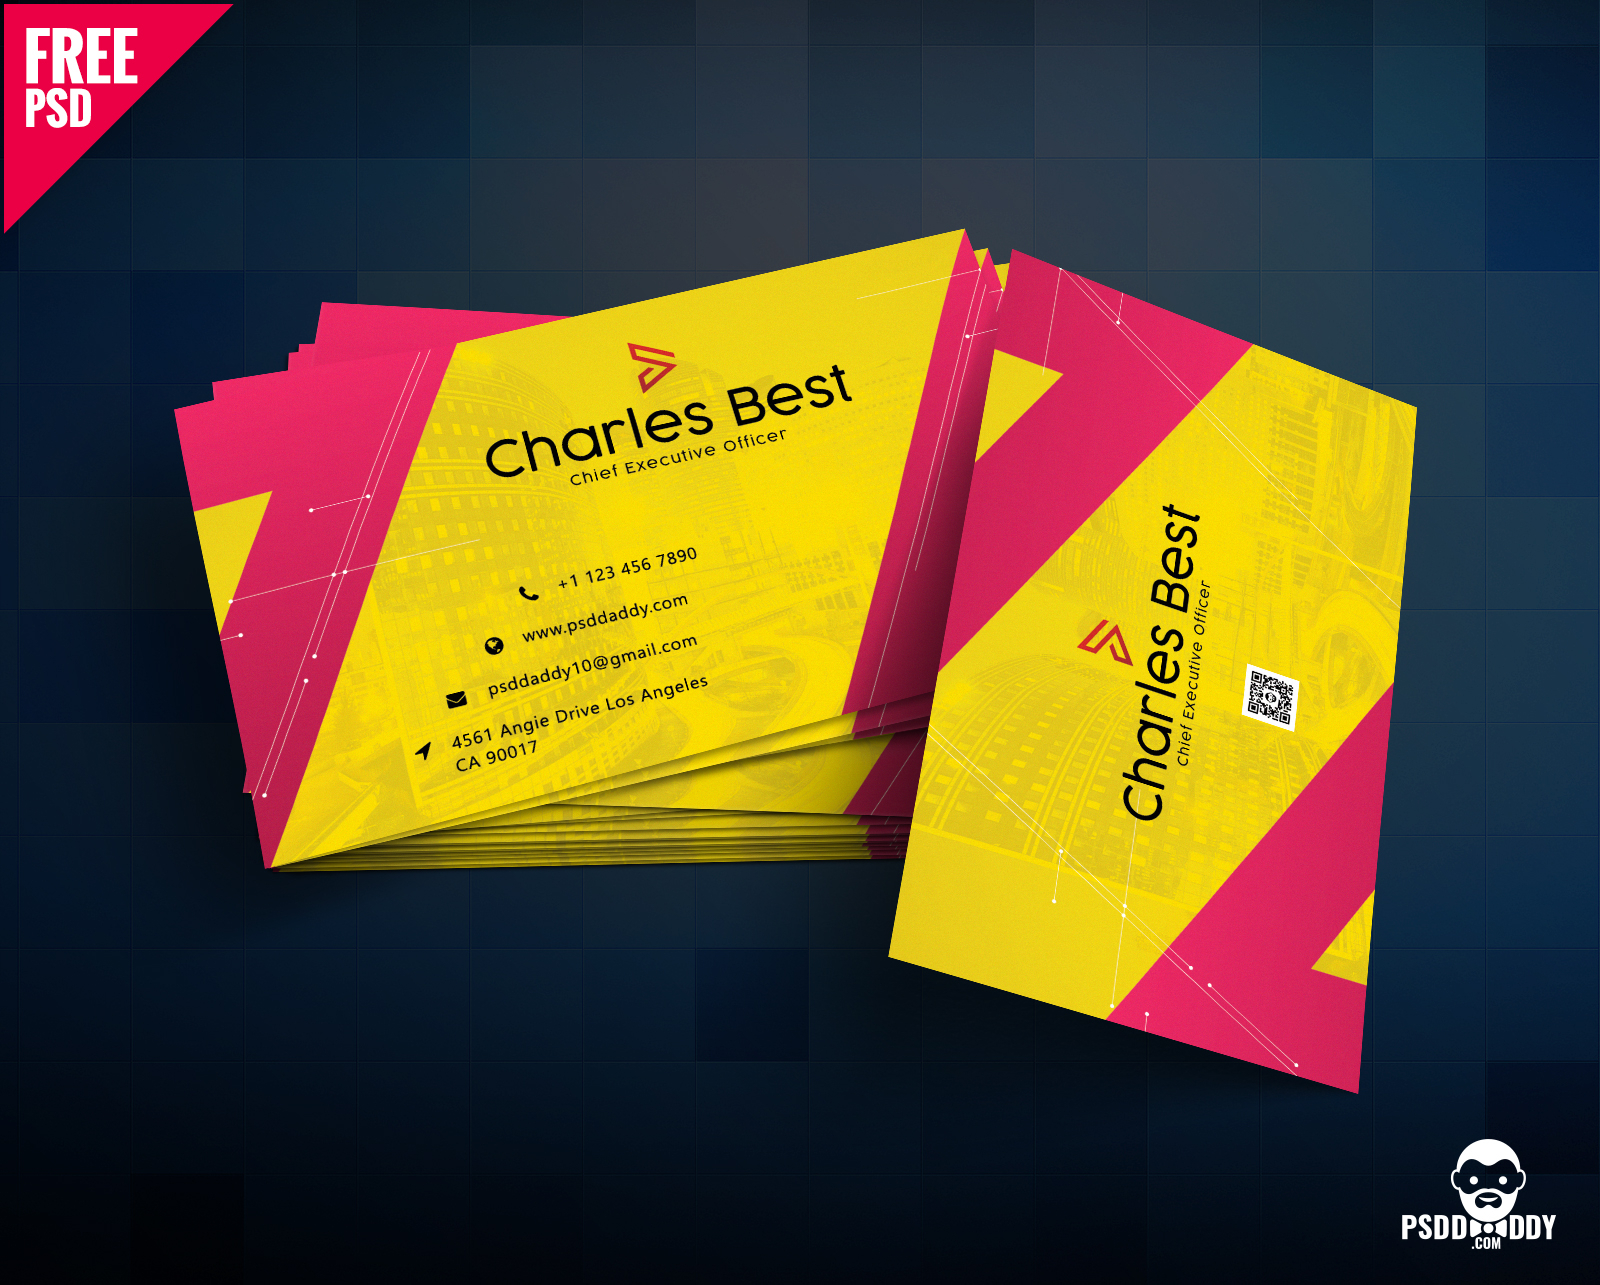 Download] Creative Business Card Free Psd | Psddaddy Regarding Photoshop Cs6 Business Card Template